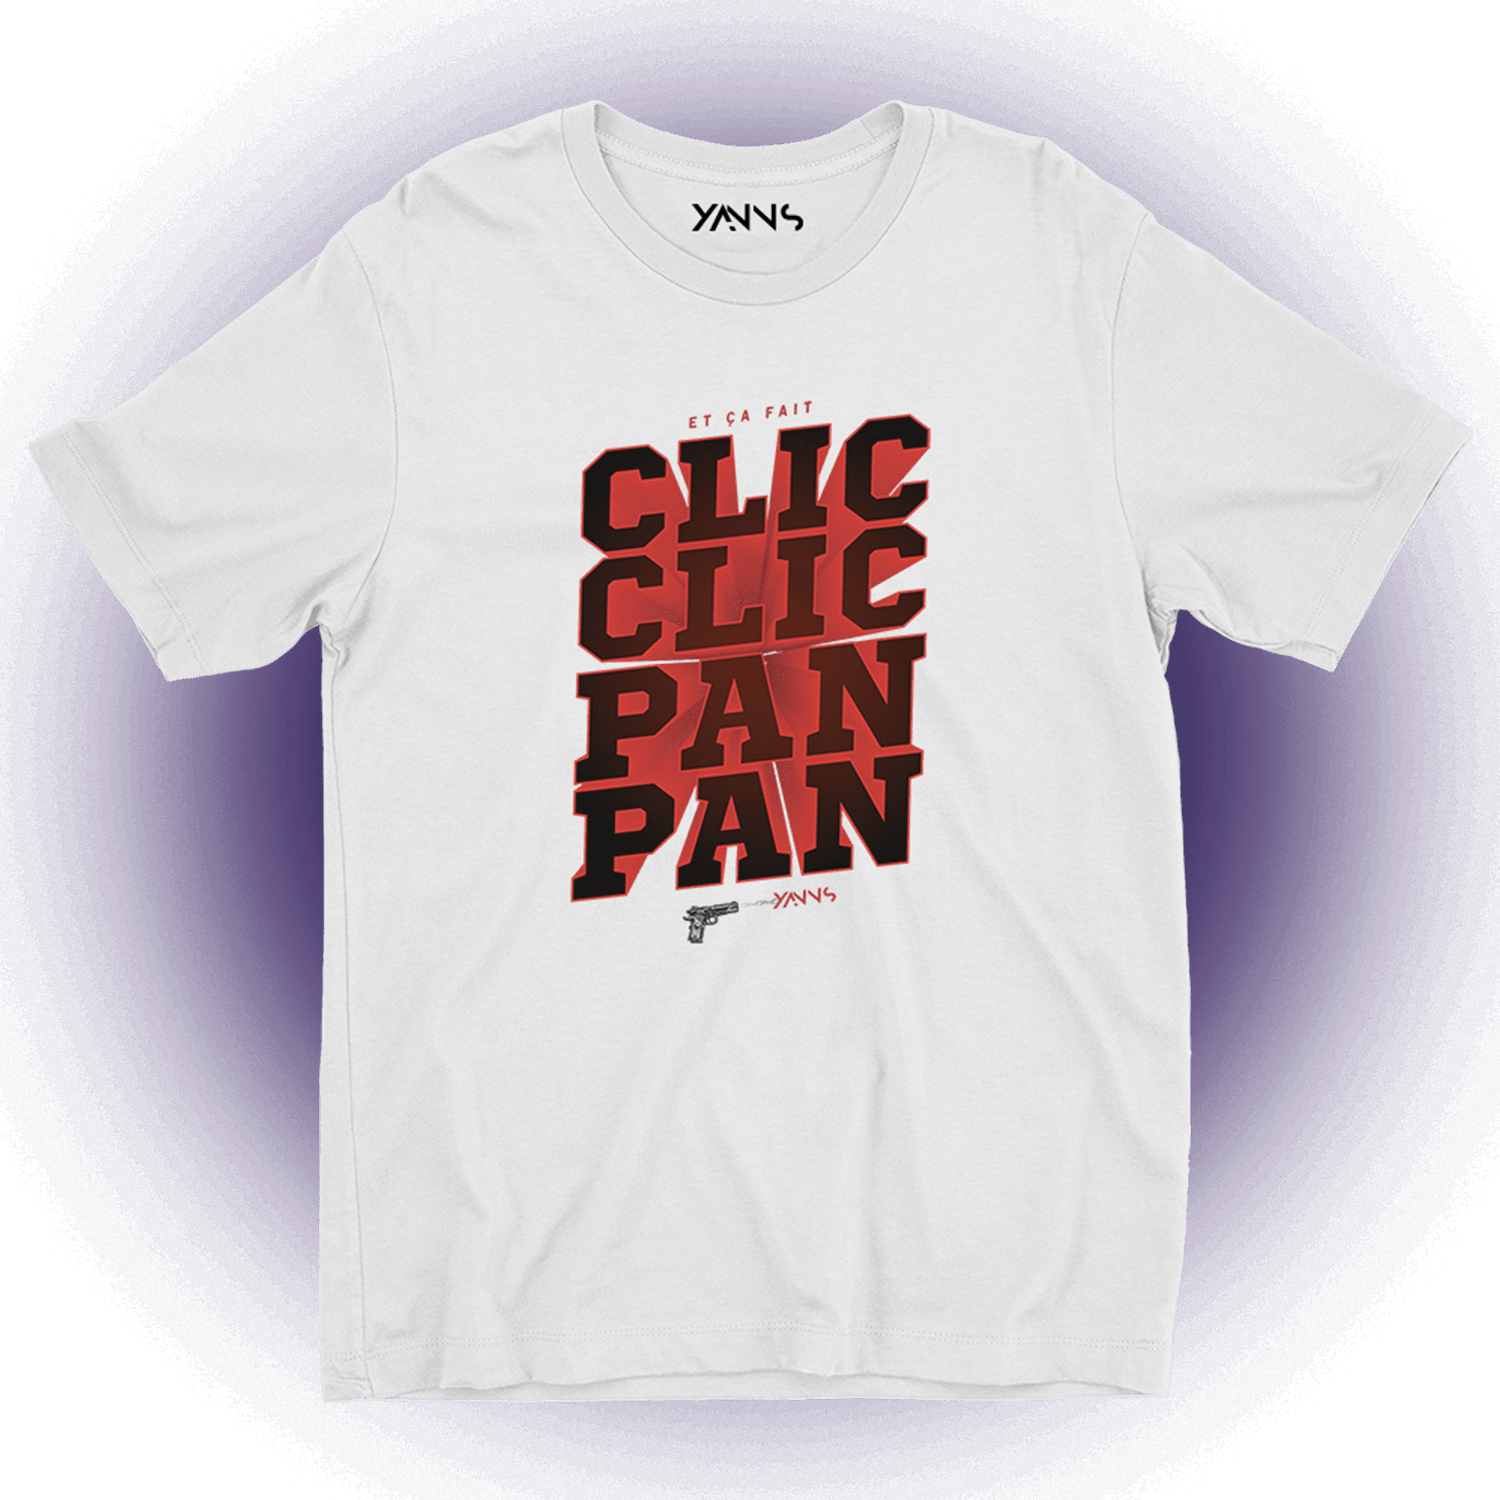 https://cdn.yanns.shop/products_images/prod_1628/d_t-shirts-yanns-yan0002-h14-t-shirt-clic-clic-pan-pan-blanc-front-14.png